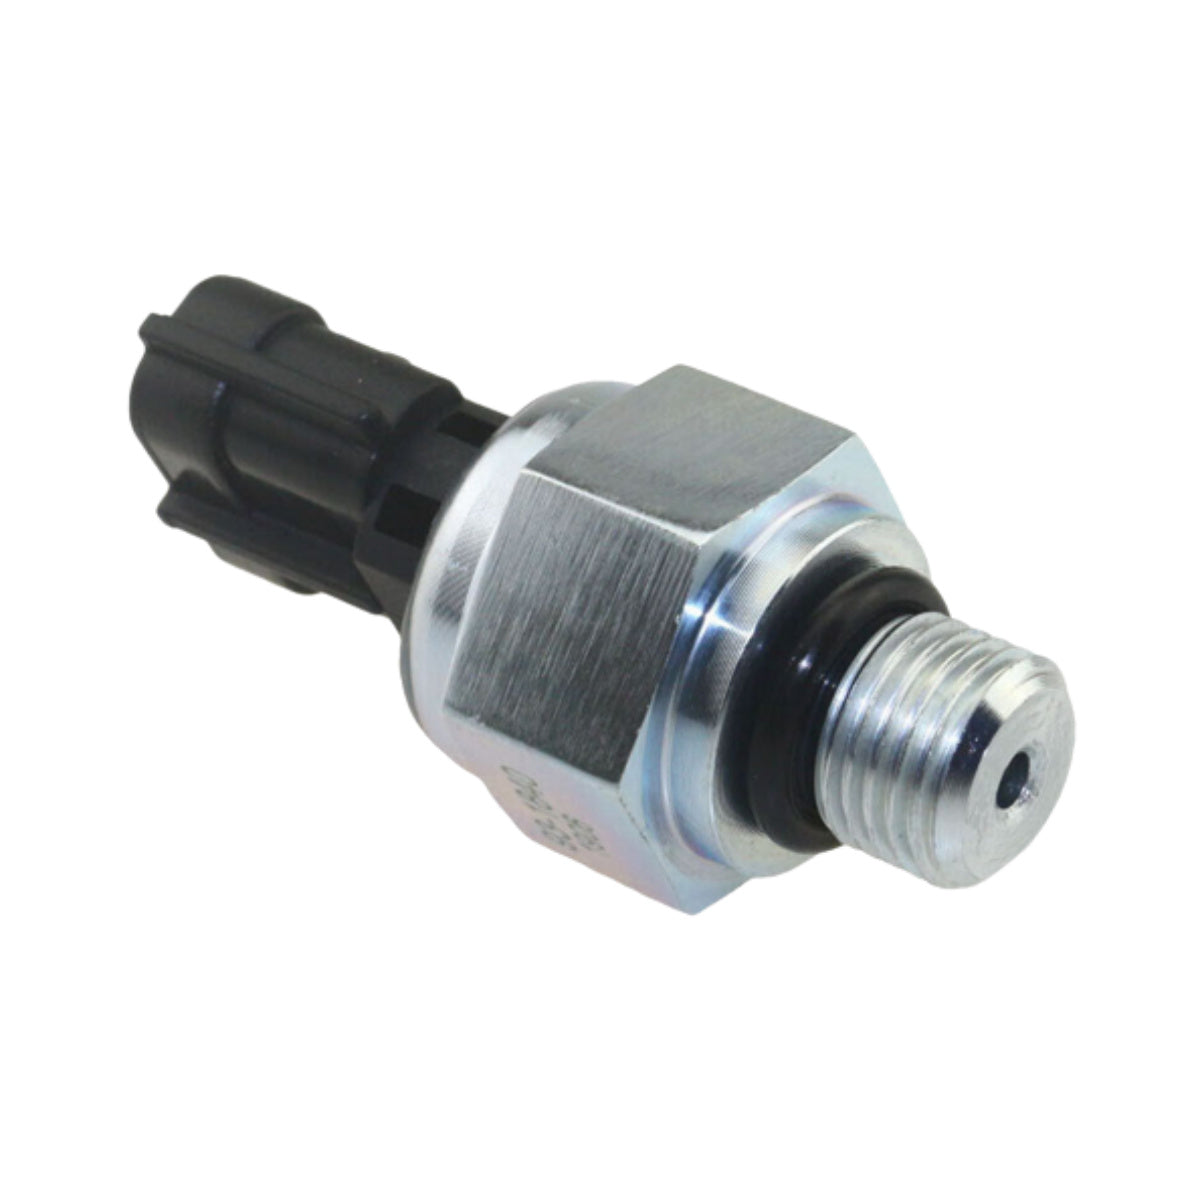 7861-93-1840 Low Pressure Sensor Switch for Komatsu PC200-8 PC300-8 - Sinocmp